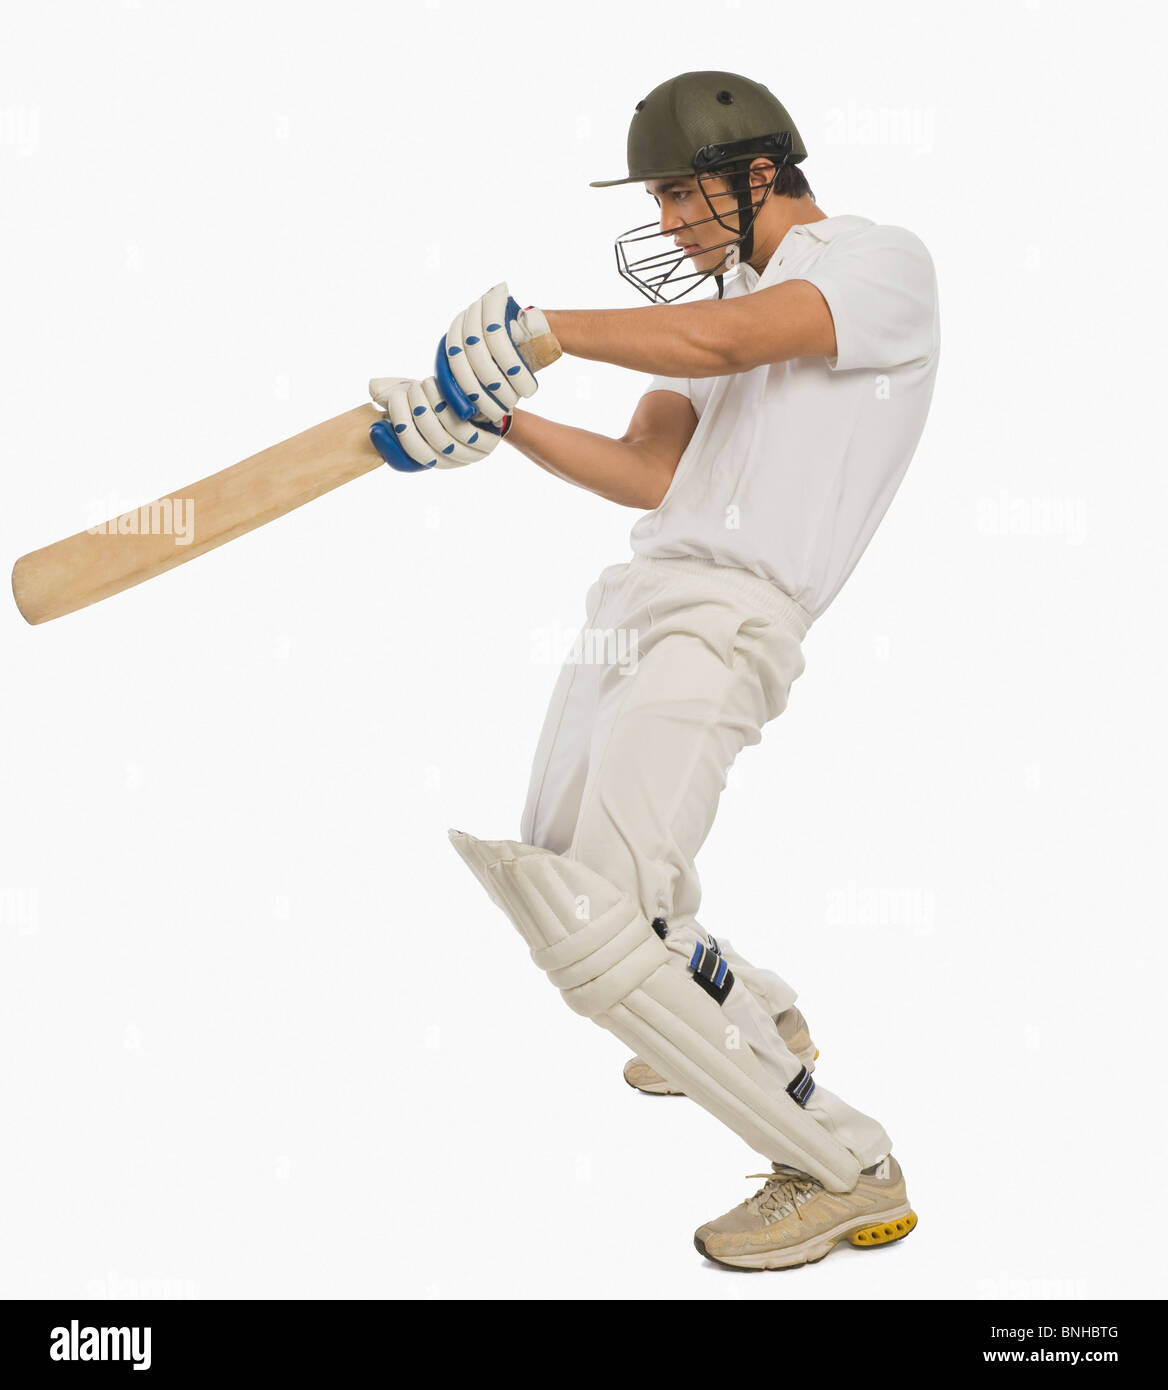 Cricket batsman playing a square cut shot Stock Photo